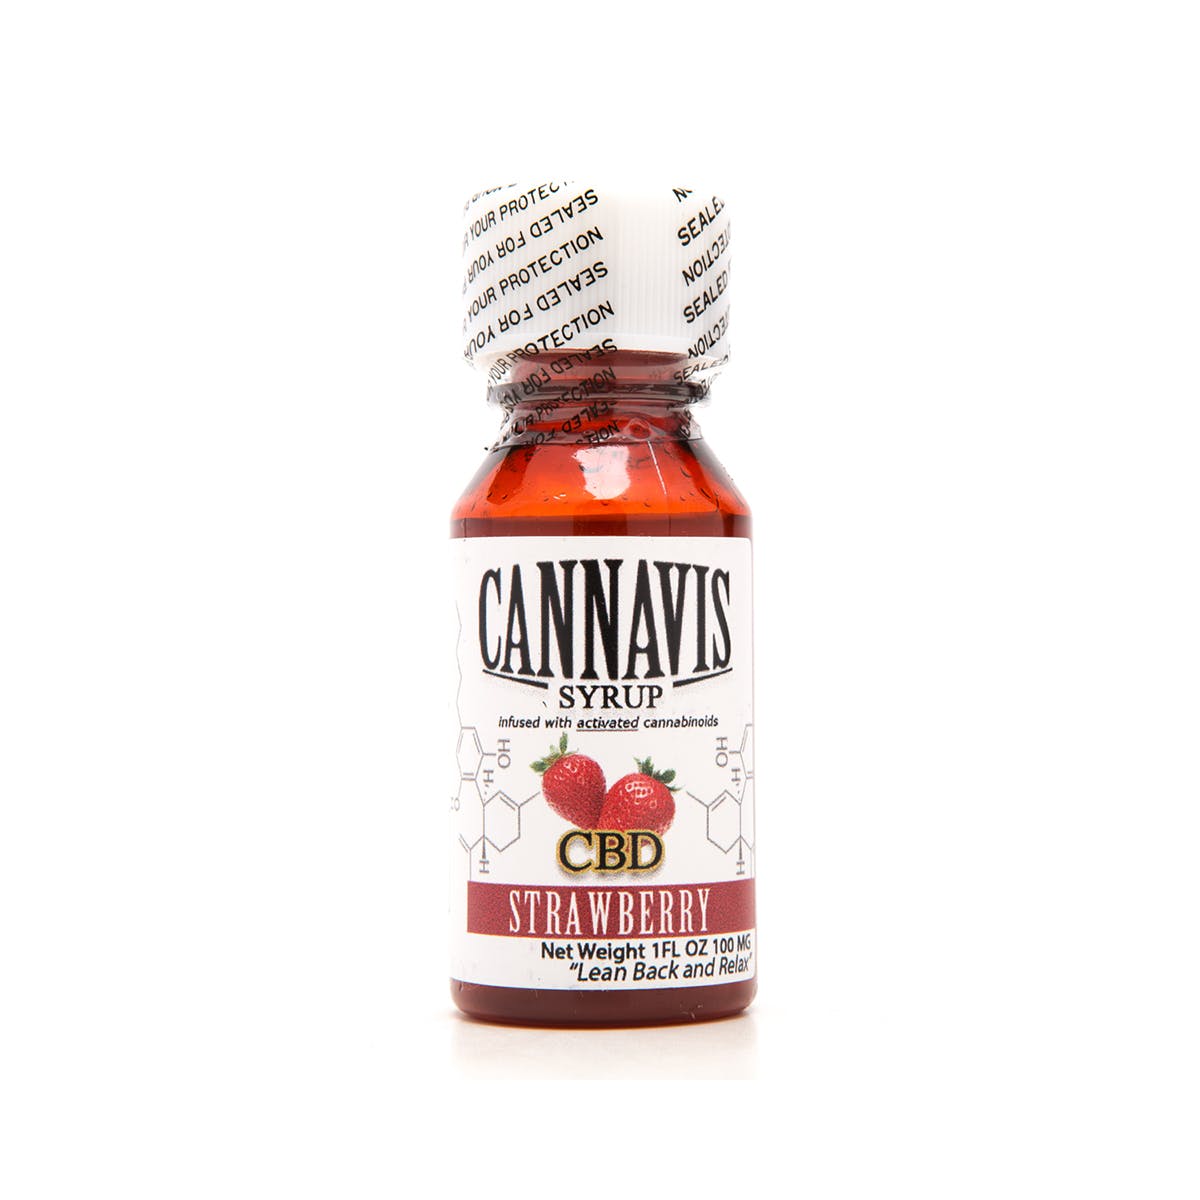 marijuana-dispensaries-lol-20-cap-in-rialto-cannavis-syrup-2c-cbd-strawberry-100mg